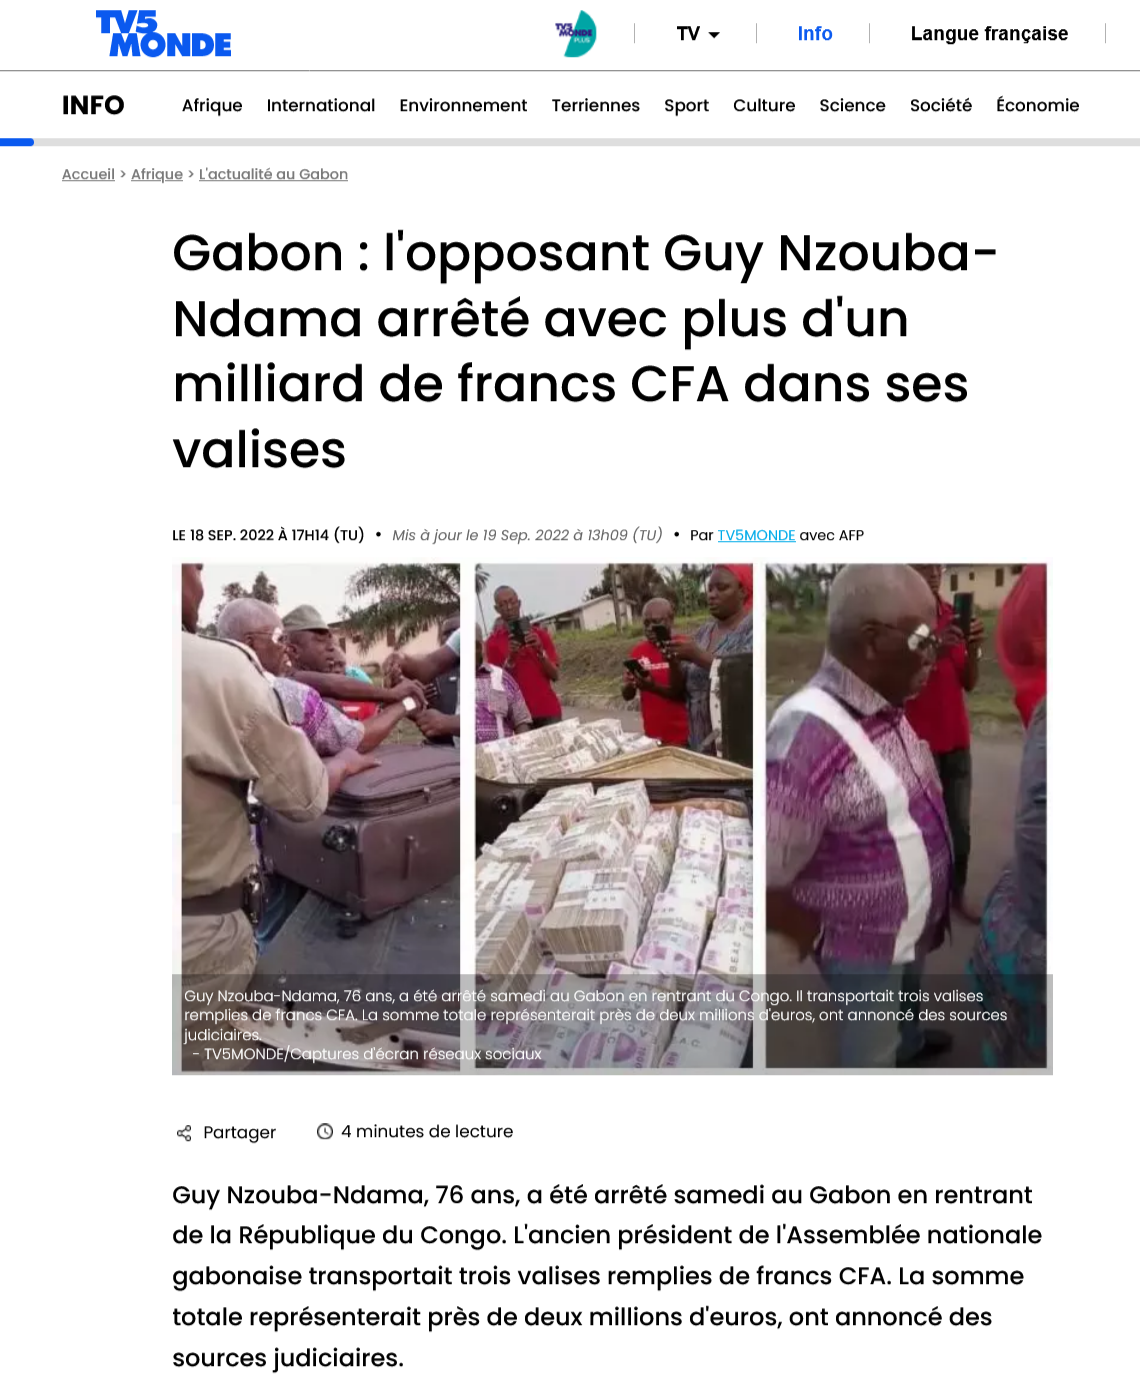 Capture 06 Meta check relu CS Gabon-politique-opposition-arrestation Guy Nzouba Ndama